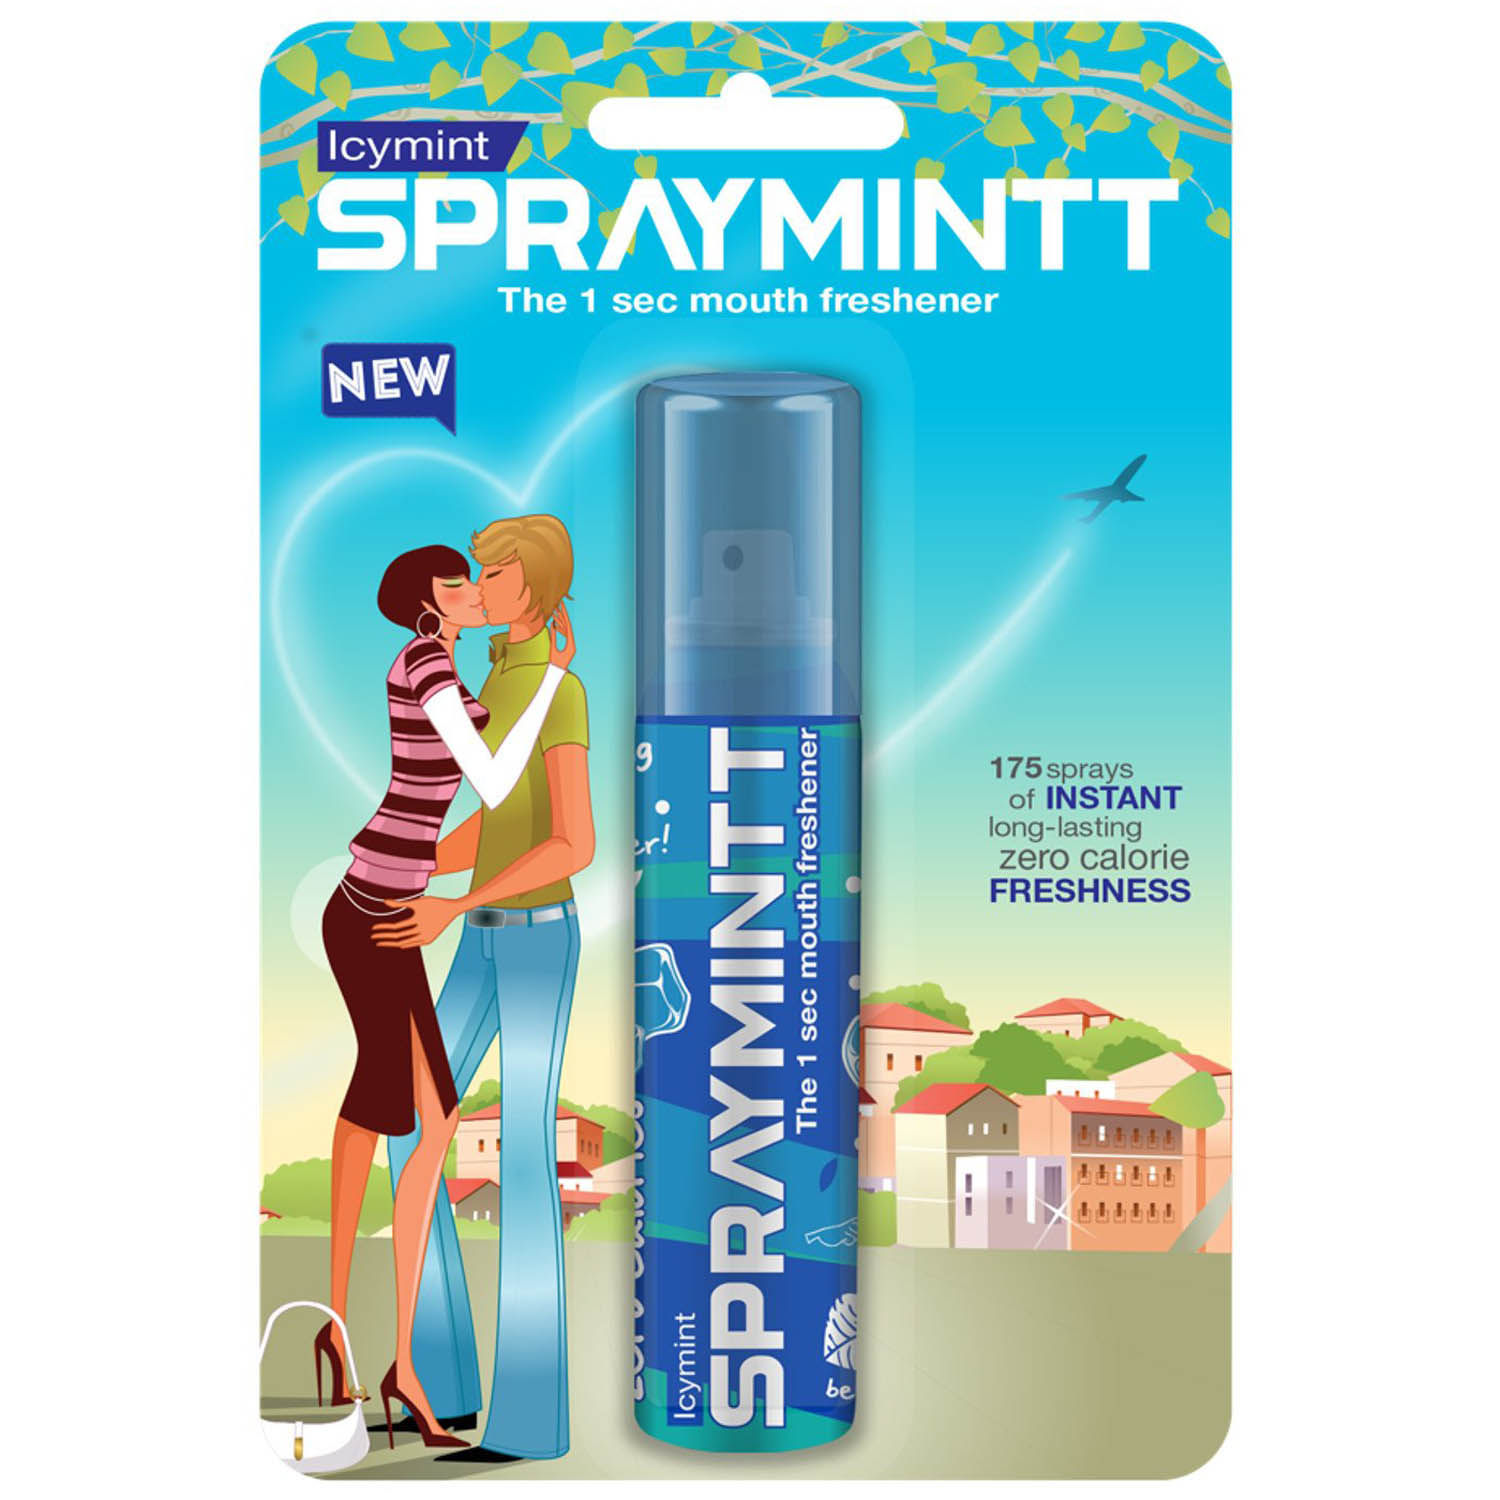 Buy Midascare Icymint Spraymintt Mouth Freshener, 15 ml Online